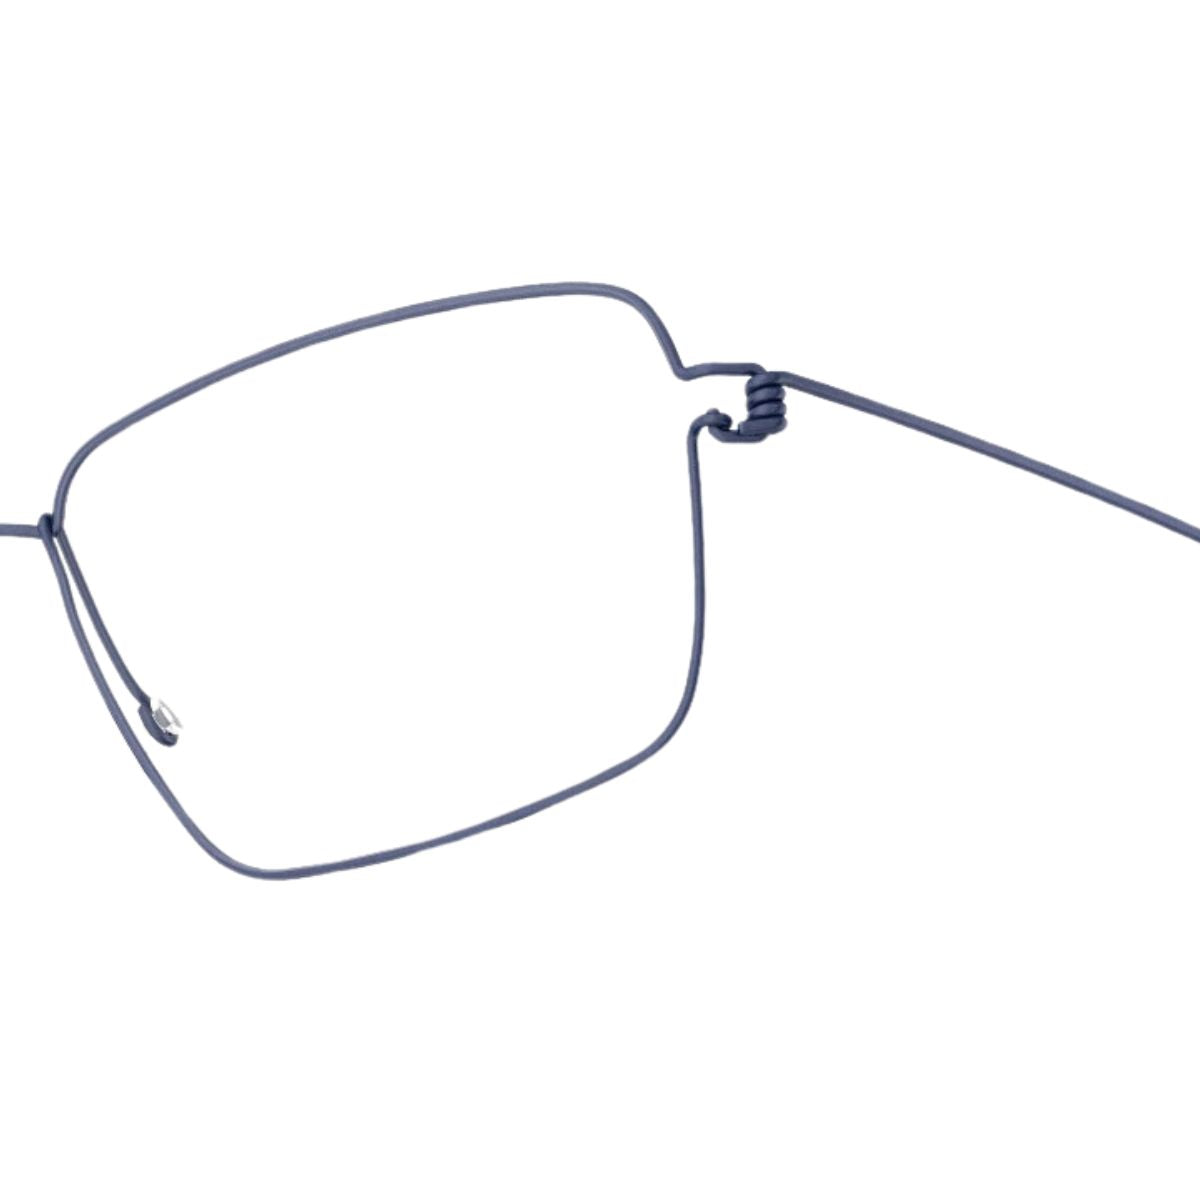 "Shop Stylish Eyeglasses from Lindberg eyewear Made In Denmark Available At Optorium"